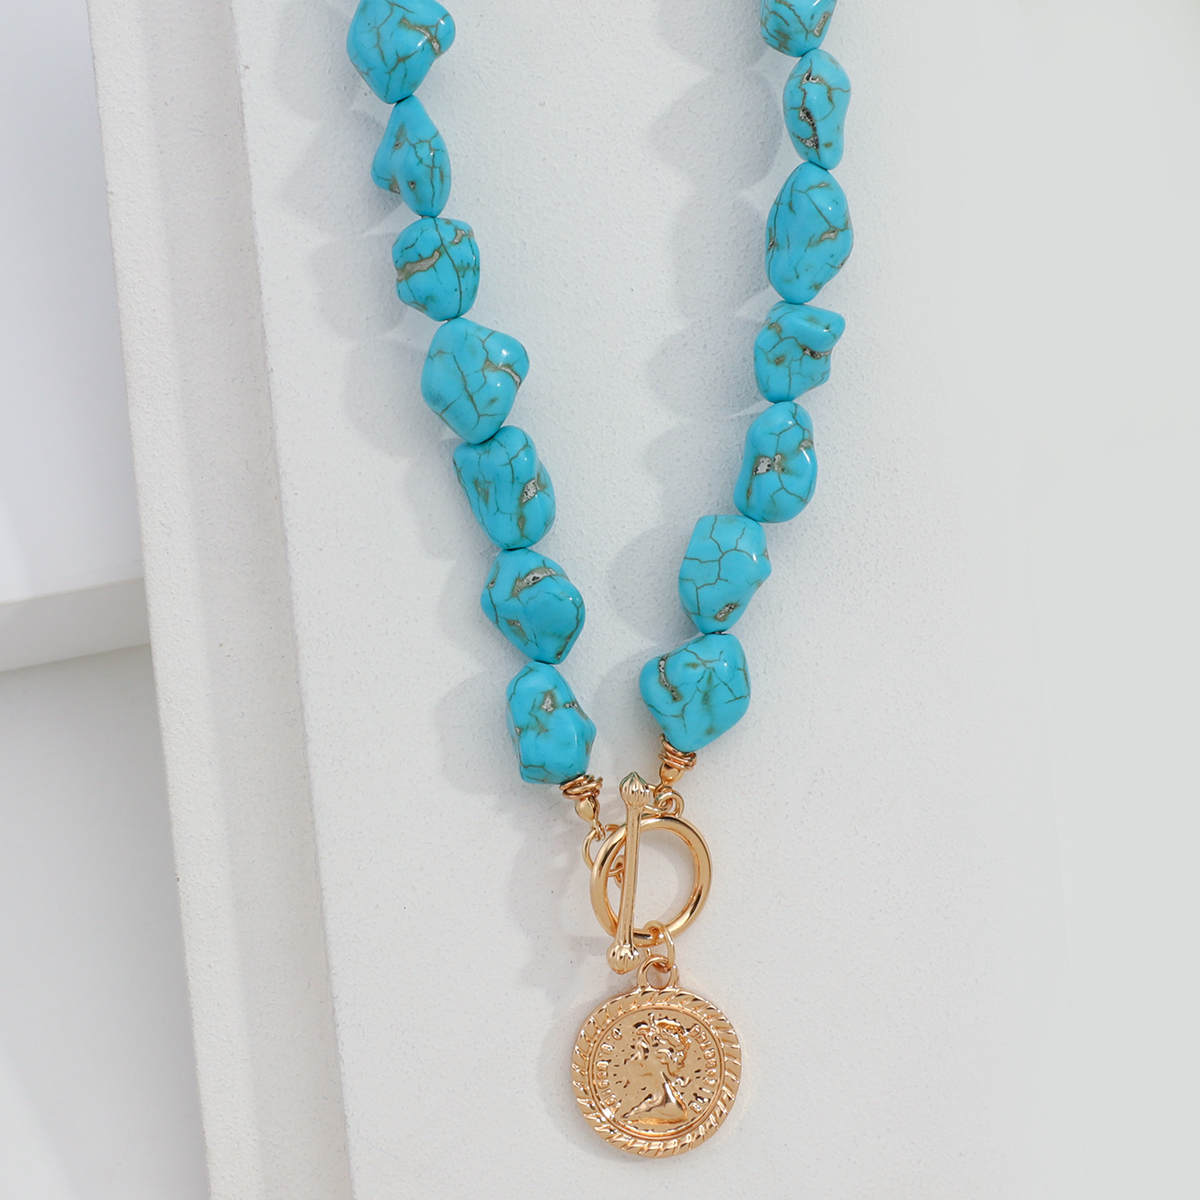 AENSOA Bohemia Blue Stone Beaded Choker Necklaces for Women Ethnic Golden Metal Portrait Coin Pendant Beads Chain Jewlery 2022 1